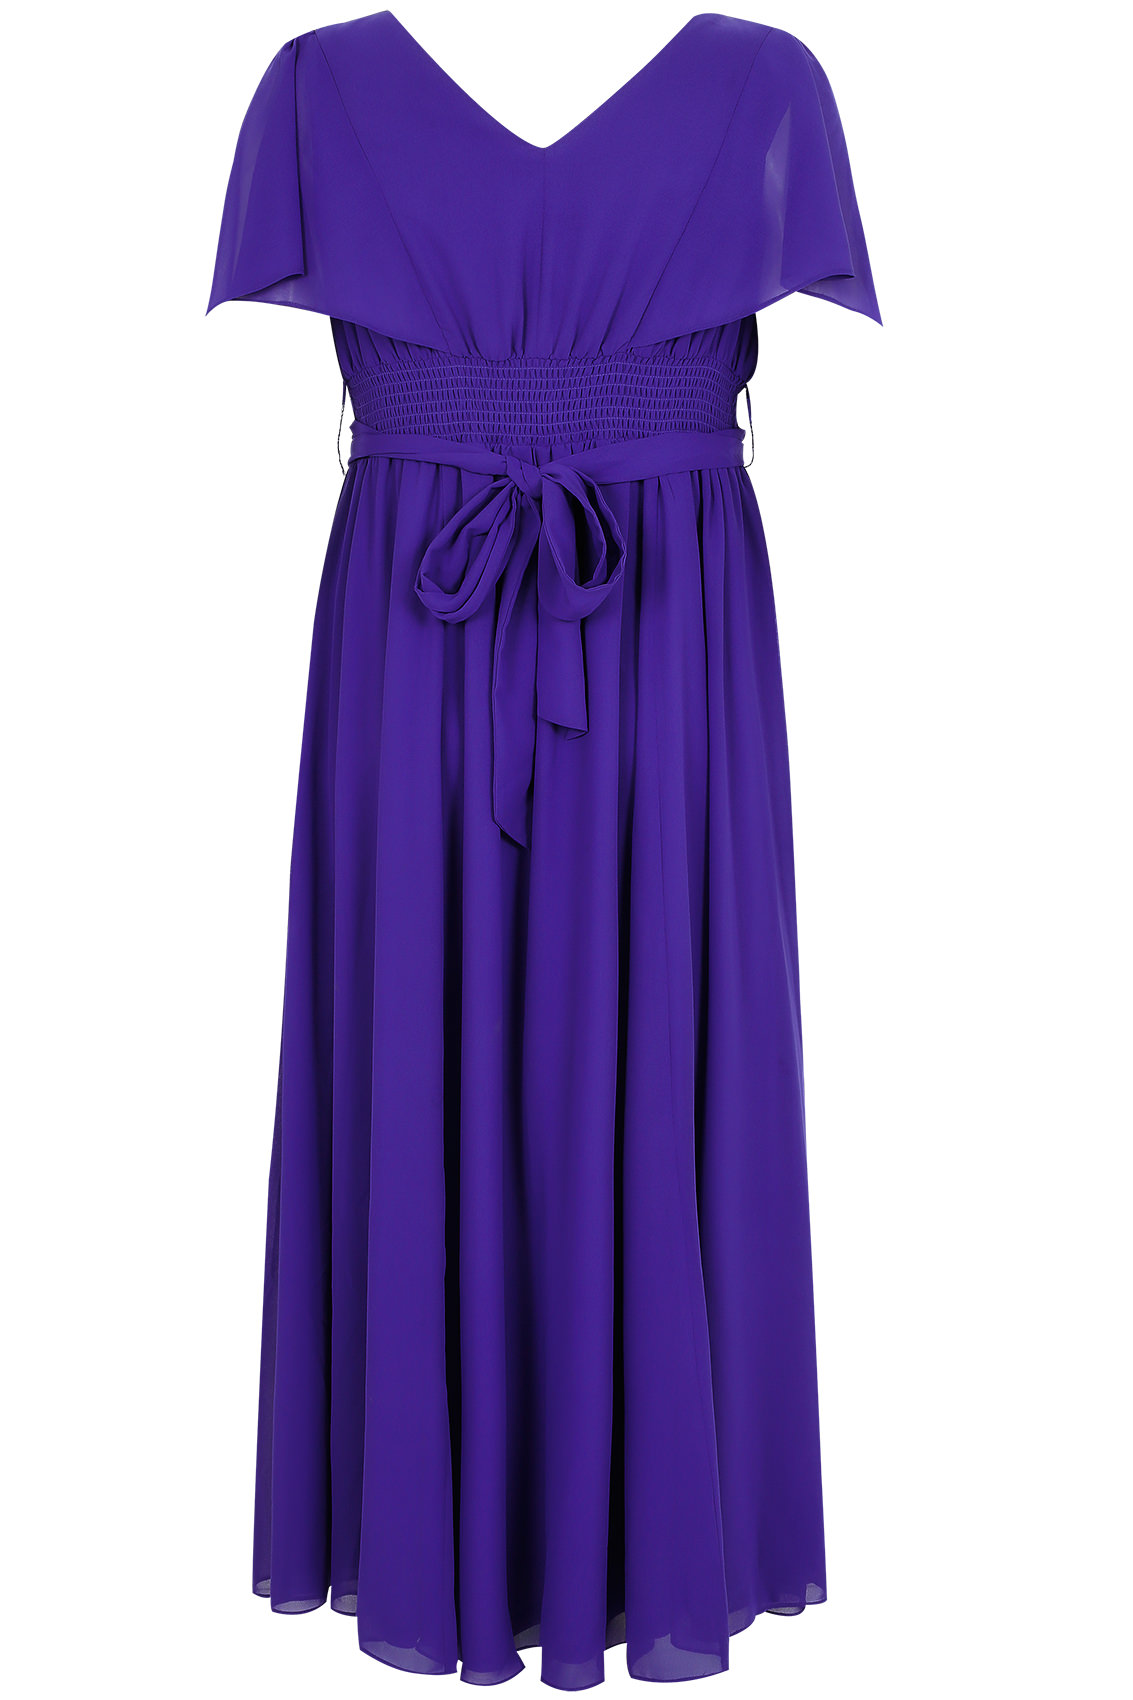 SCARLETT & JO Blue Chiffon Maxi Dress With Embellished Waist Tie, Plus ...